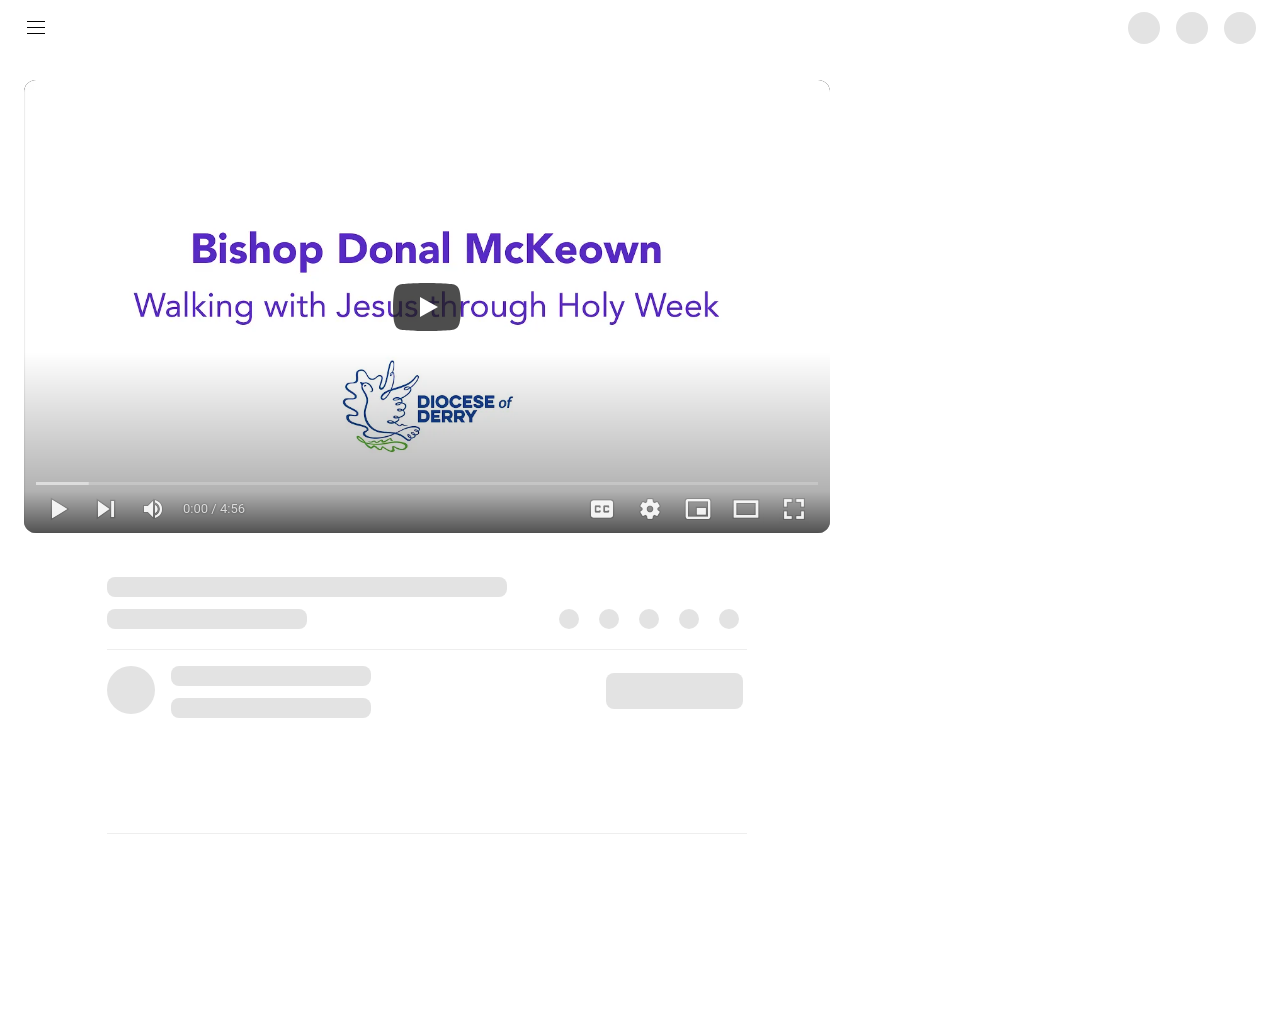 Walking with Jesus through Holy Week with Bishop Donal McKeown